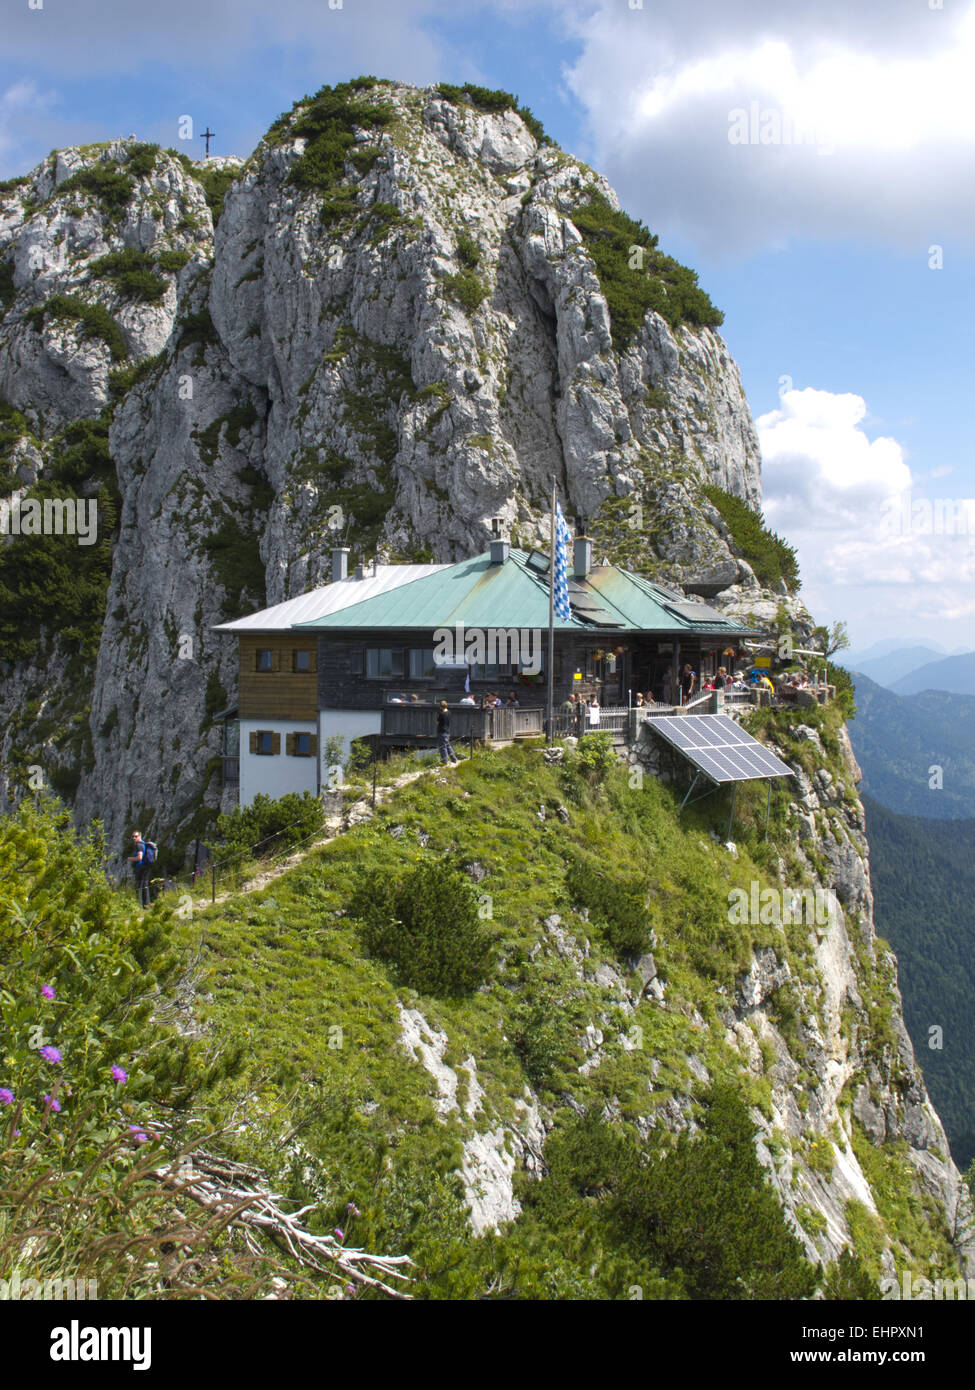 restaurant house in alps mountains, bavaria Stock Photo